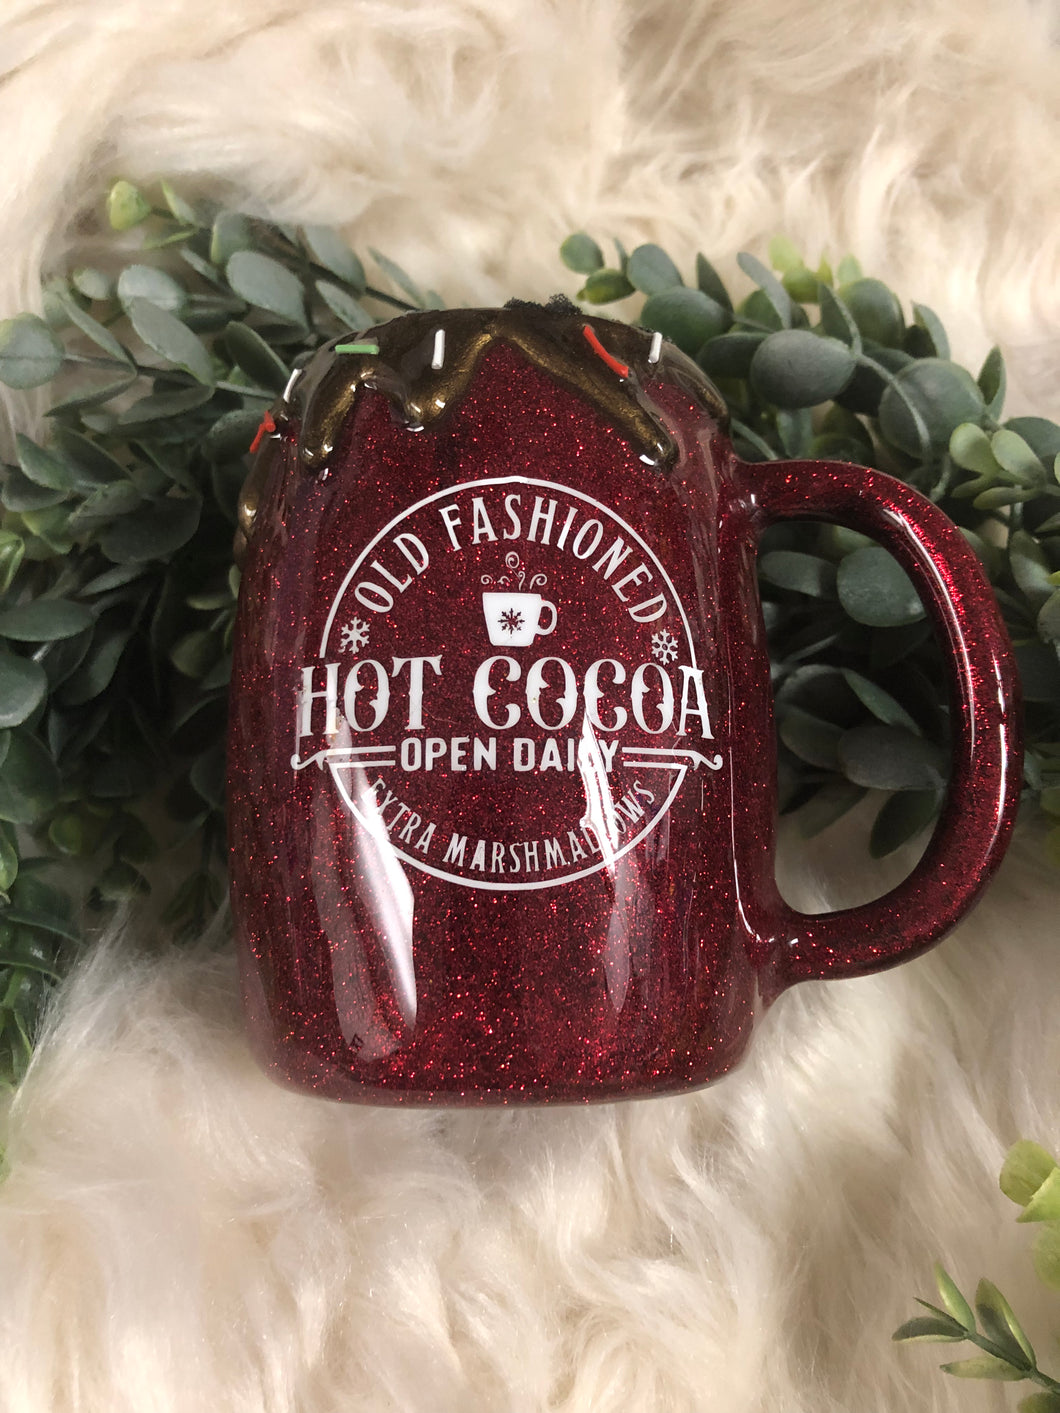 Hot cocoa glitter mug Finished Designer Stainless Steel Coffee Mug #121  Ready to ship!